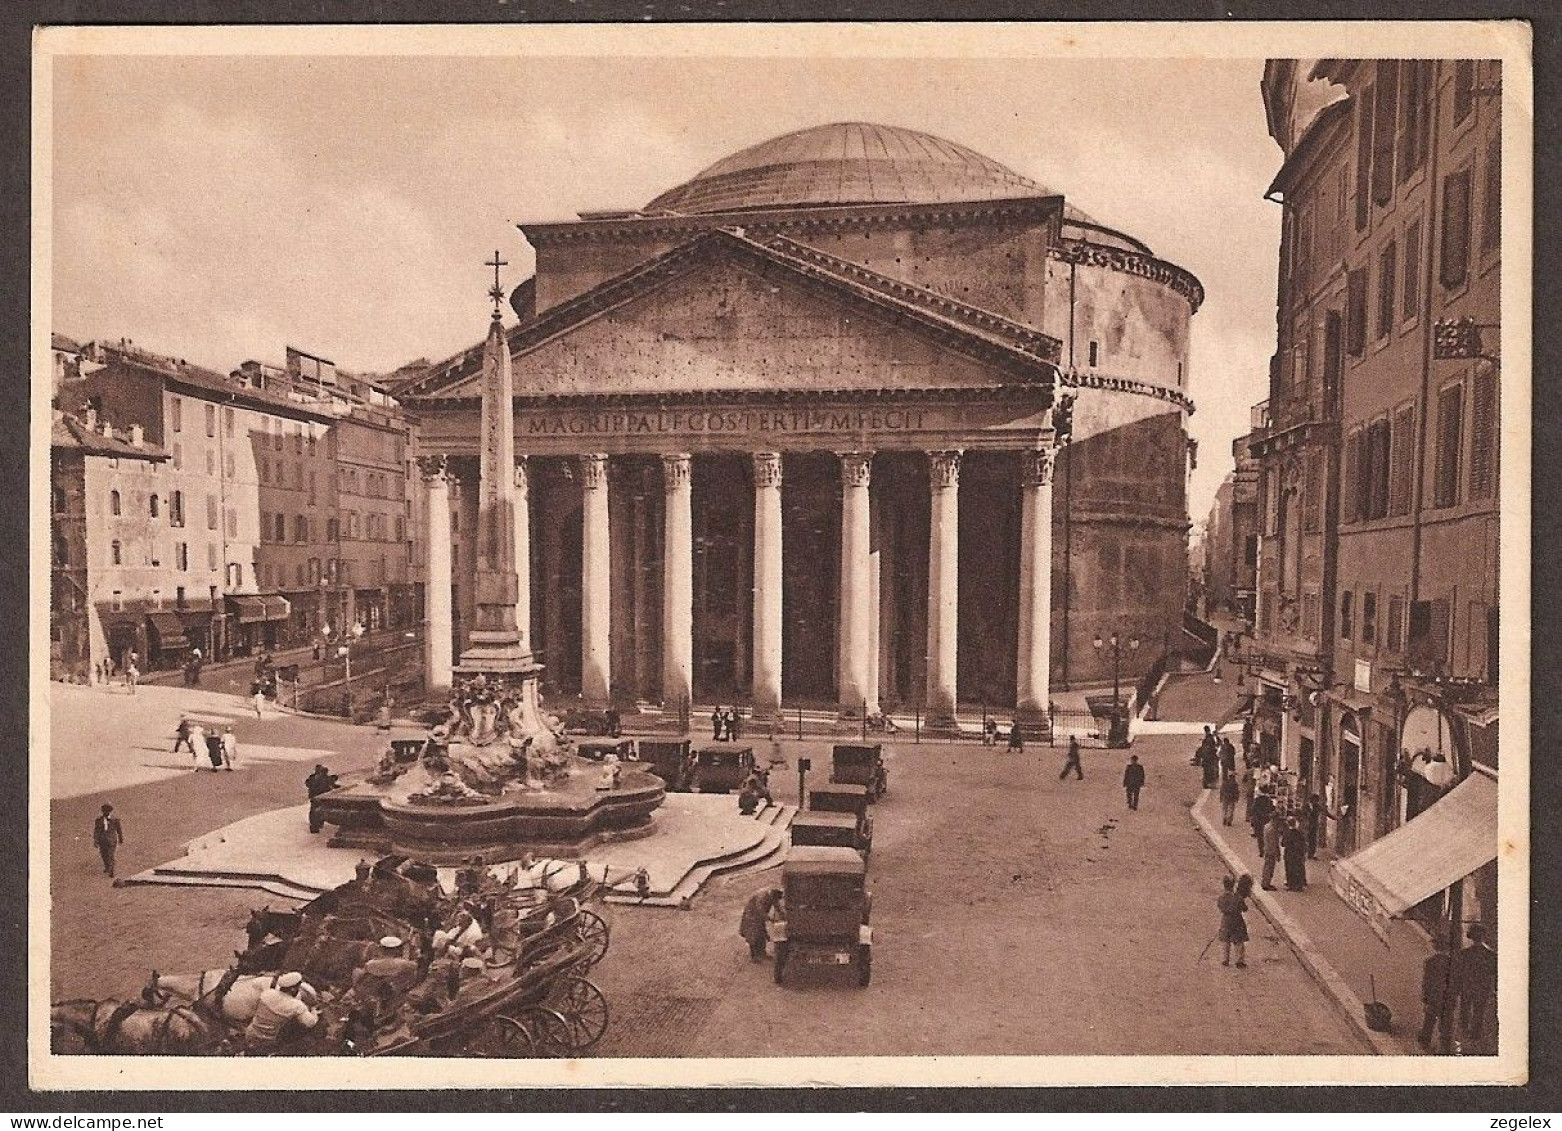 Roma - Pantheon - Carriages, Automobiles Old Timers - Panteón